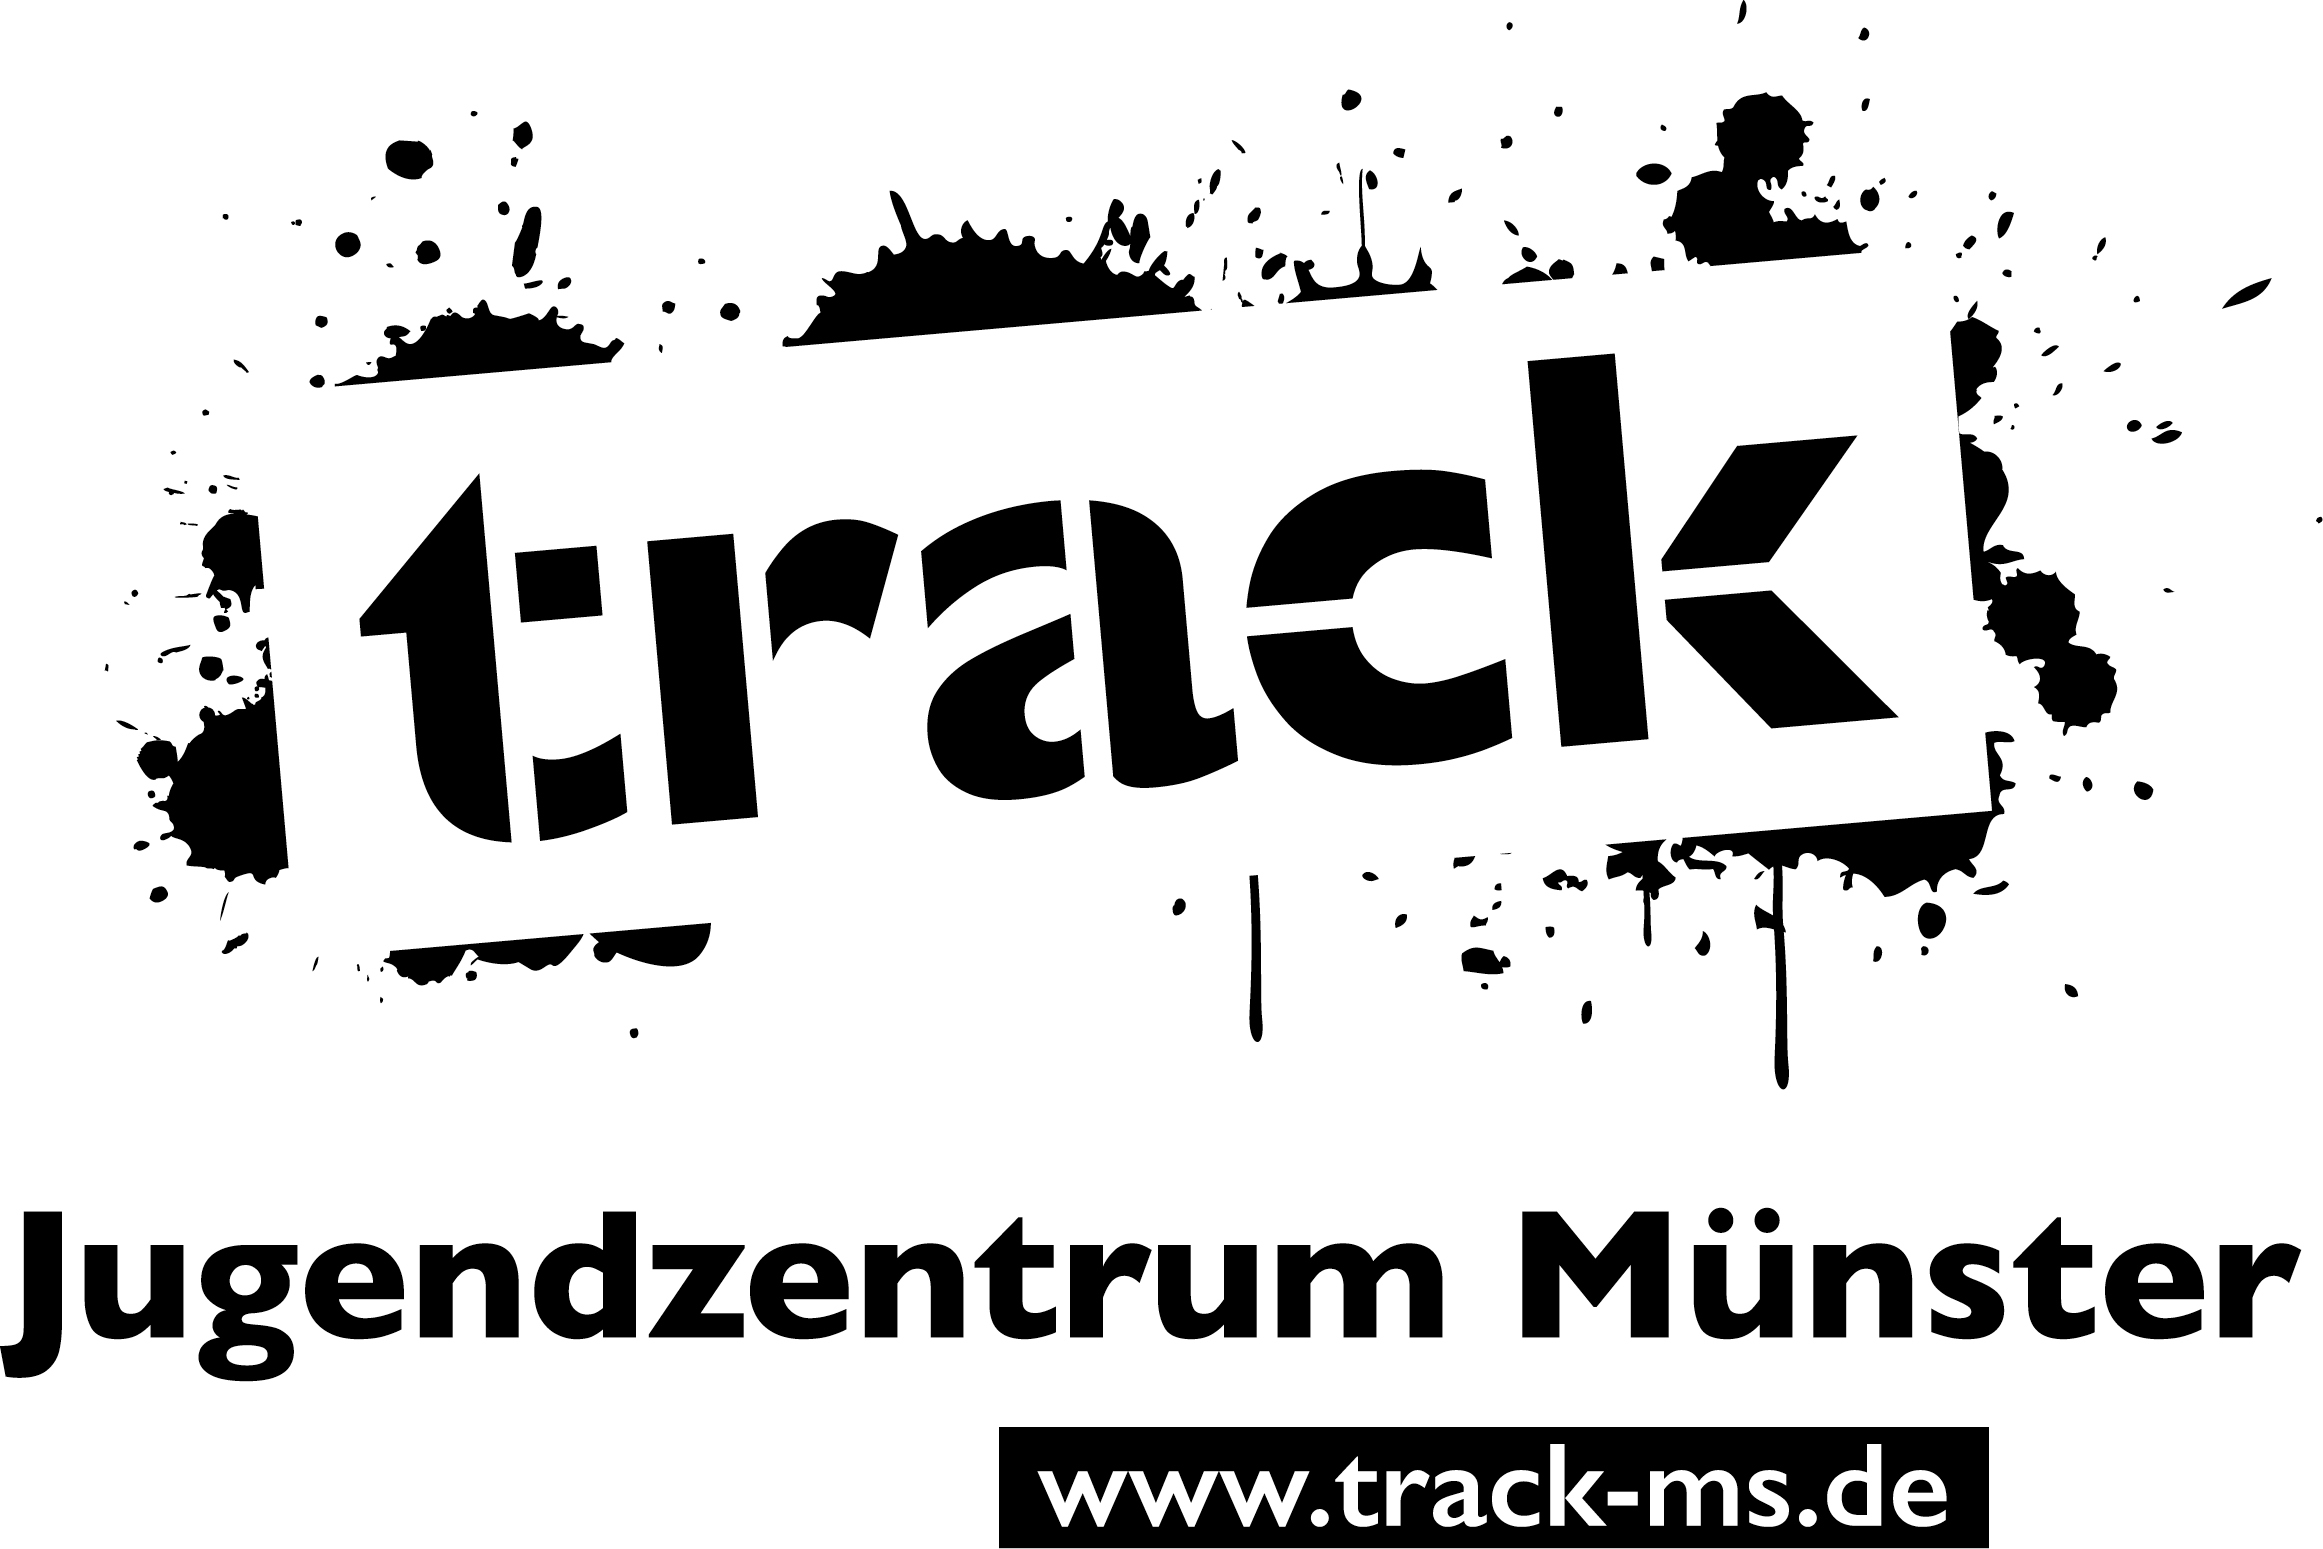 (c) Track-ms.de